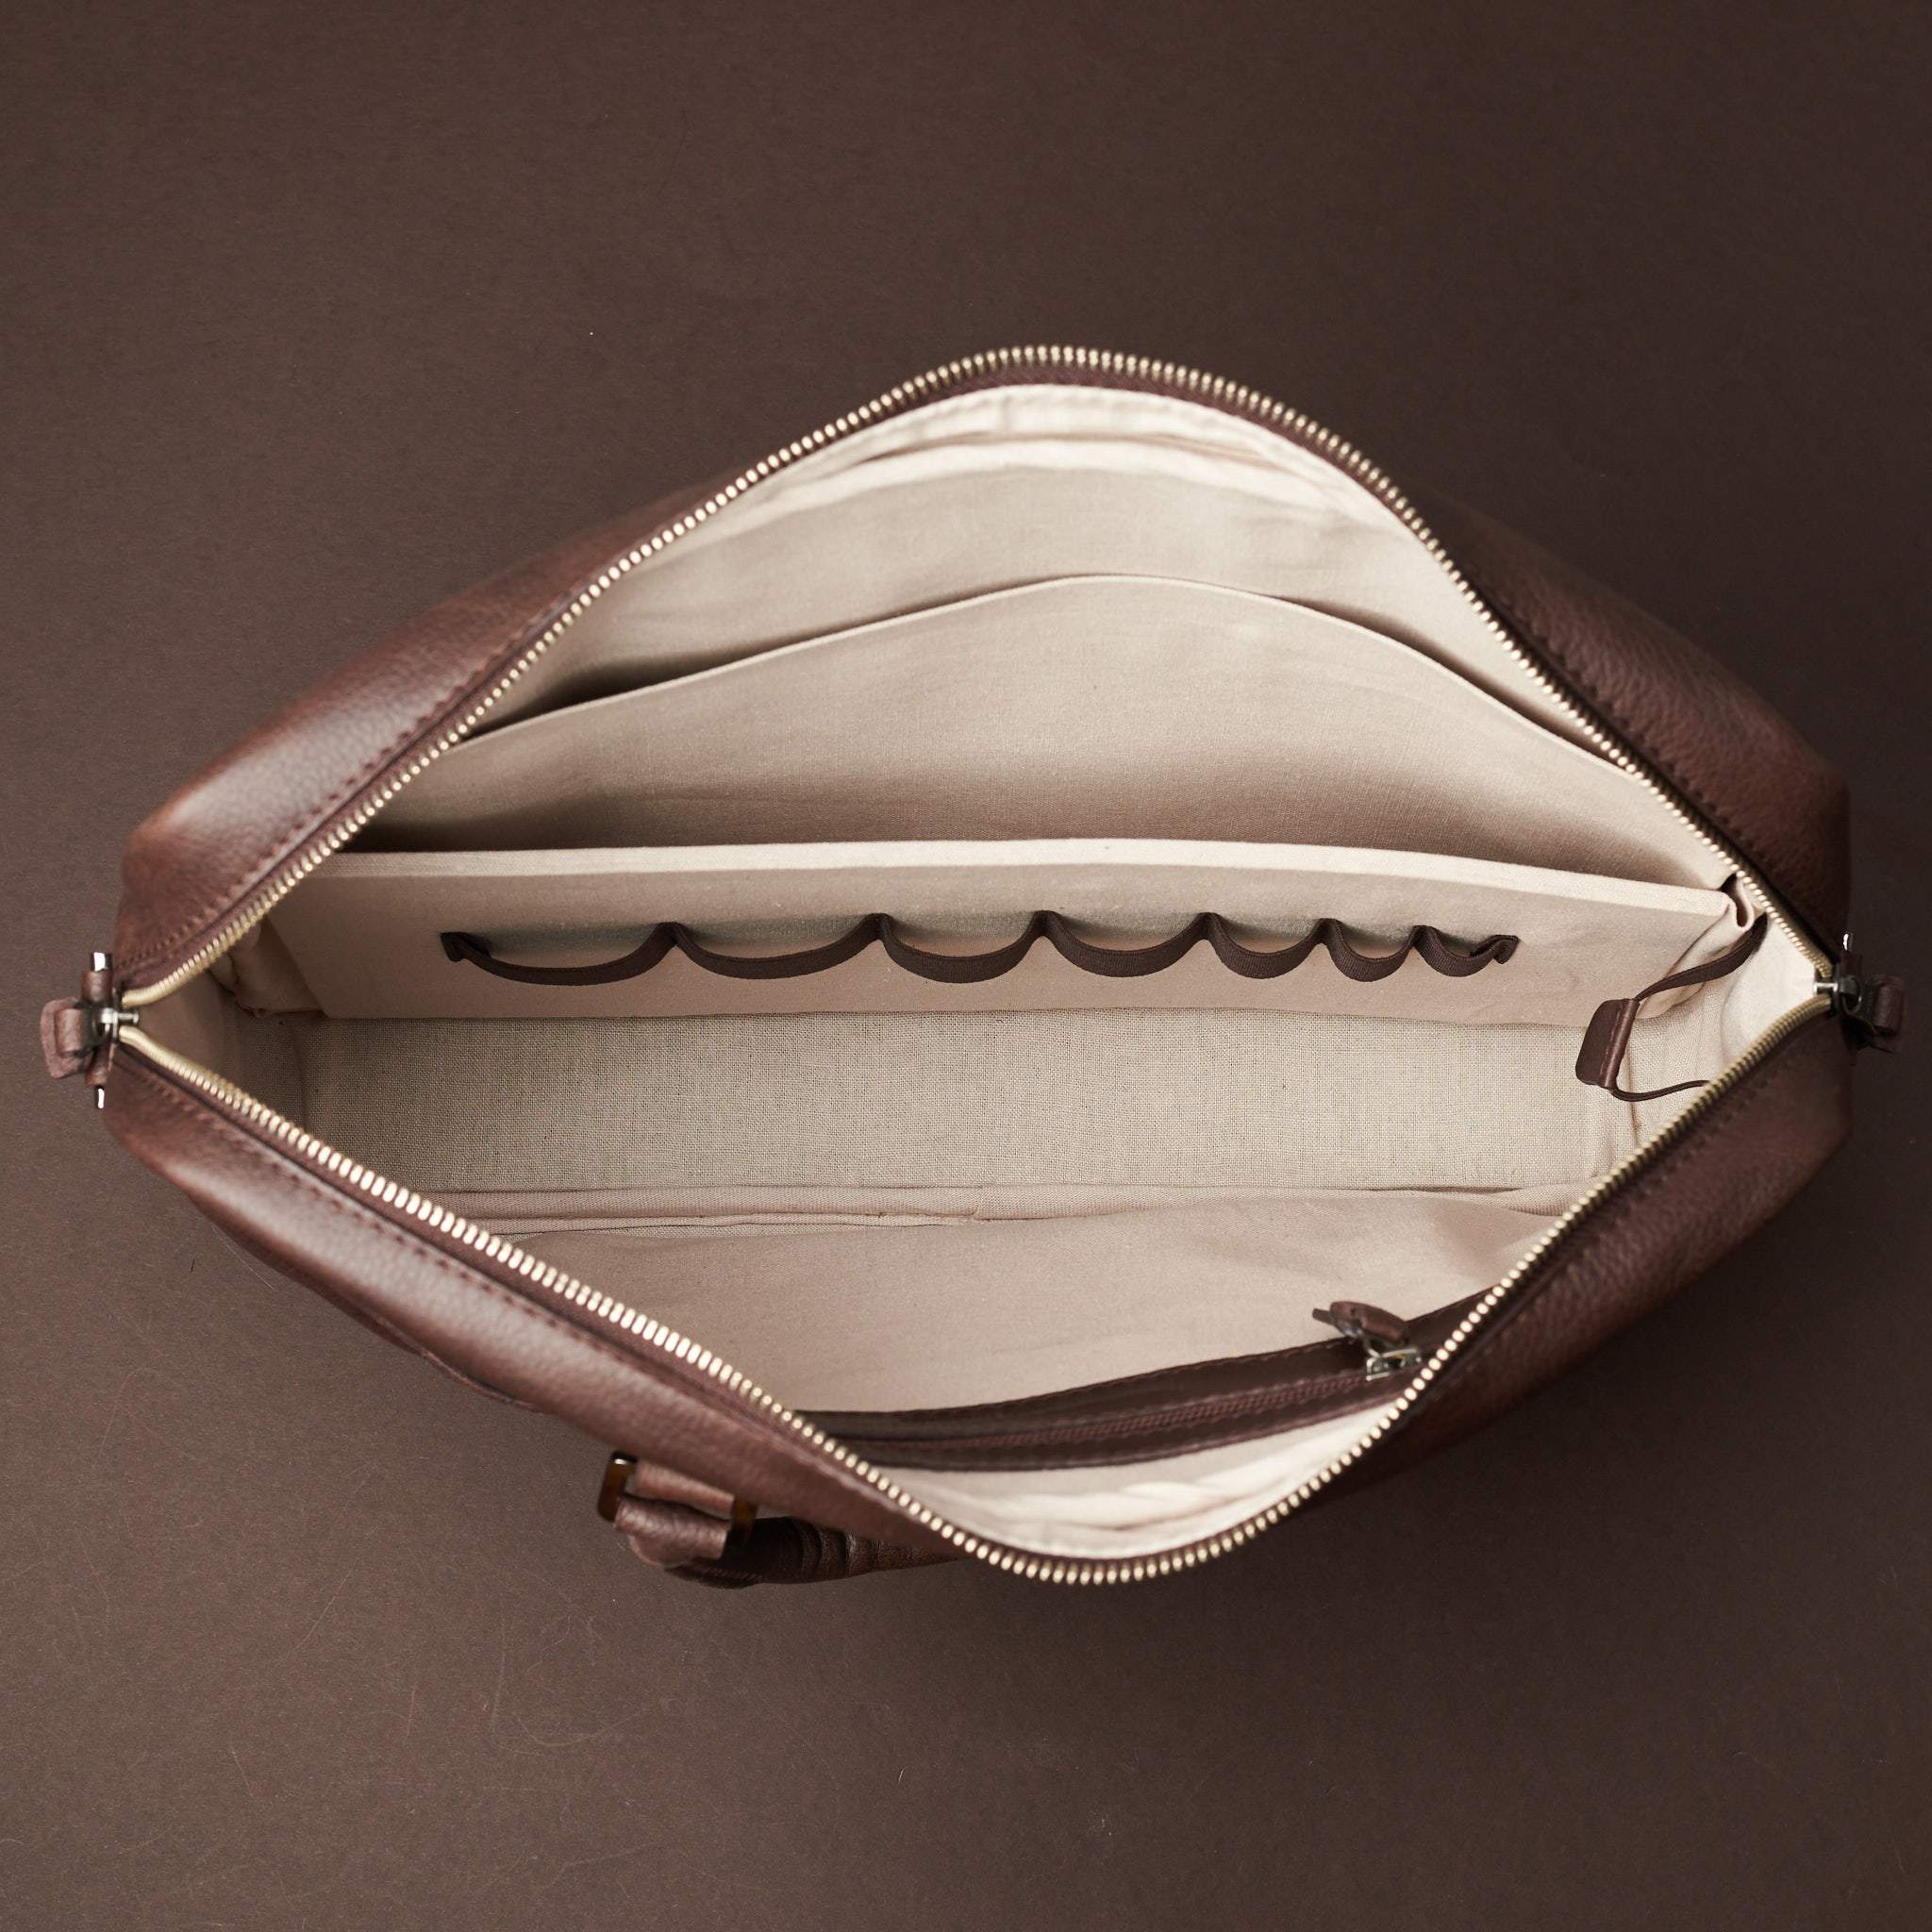 Louis Vuitton iPhone 7 Case Costs $5,000: PHOTOS